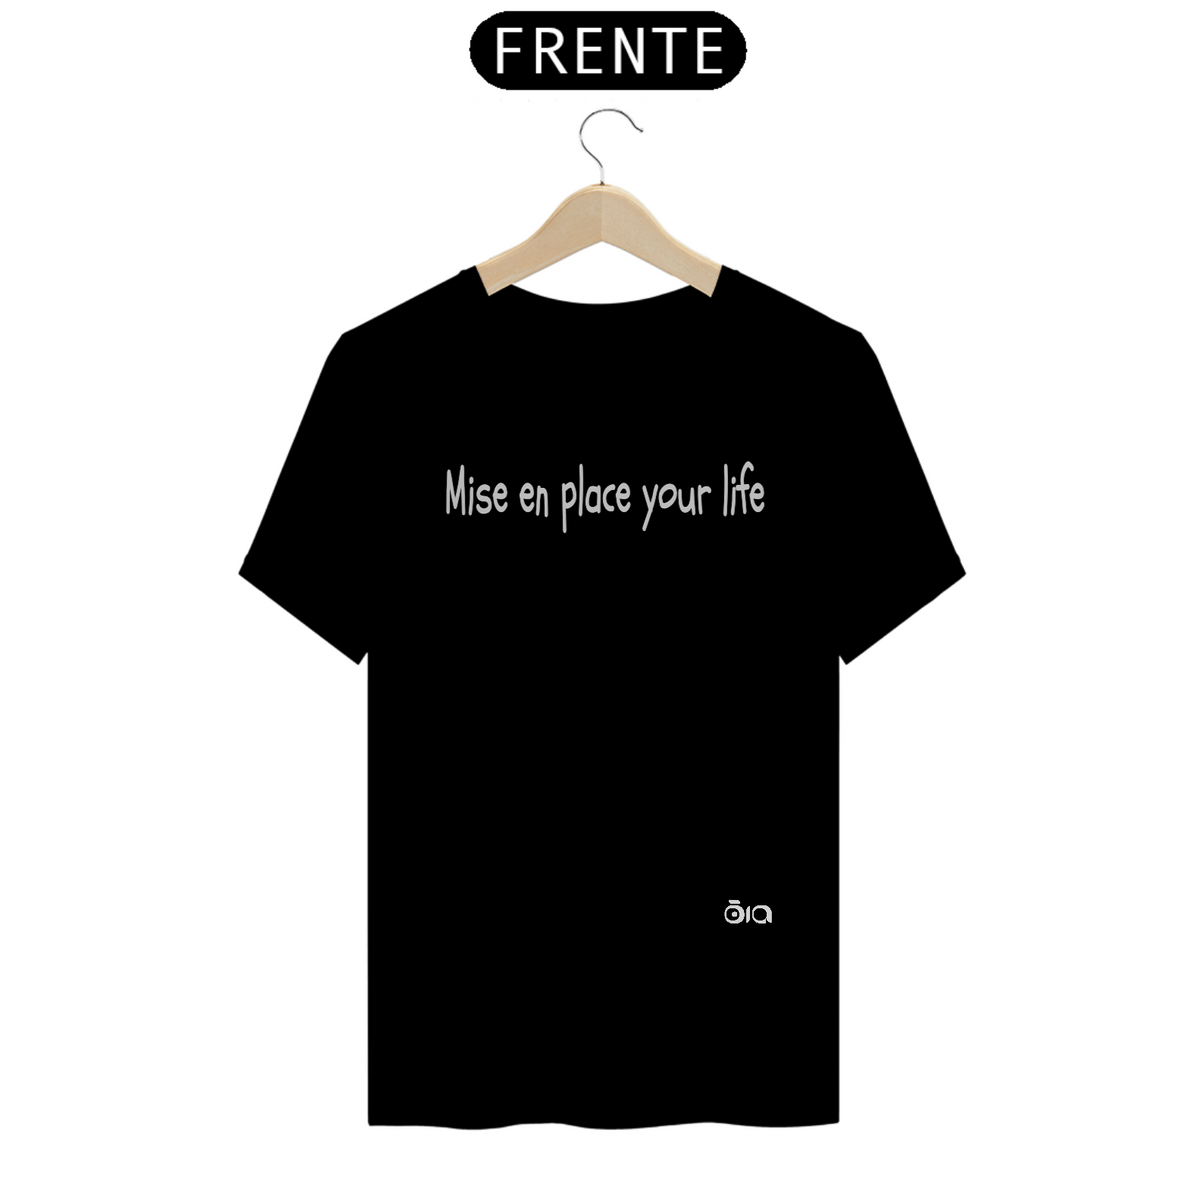 Nome do produto: Camiseta Mise en place your life 